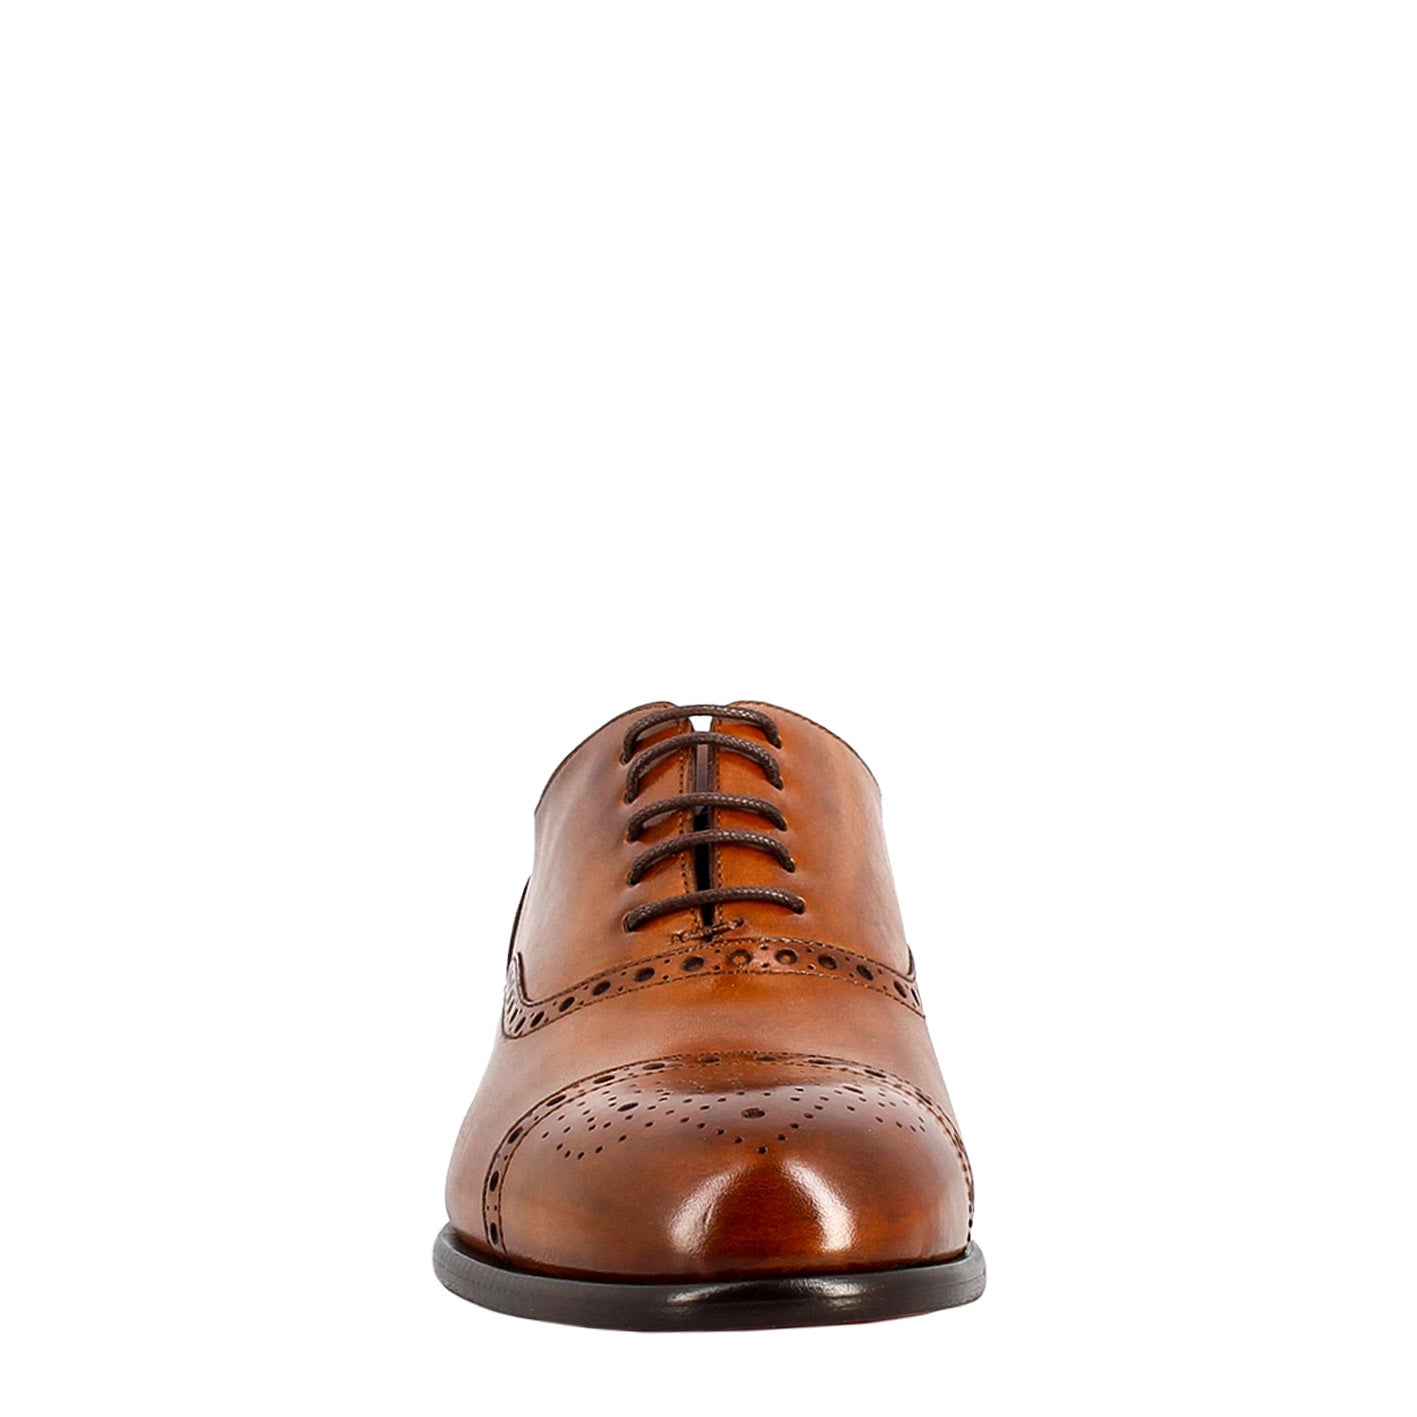 Men's elegant brown leather semi brogue oxford